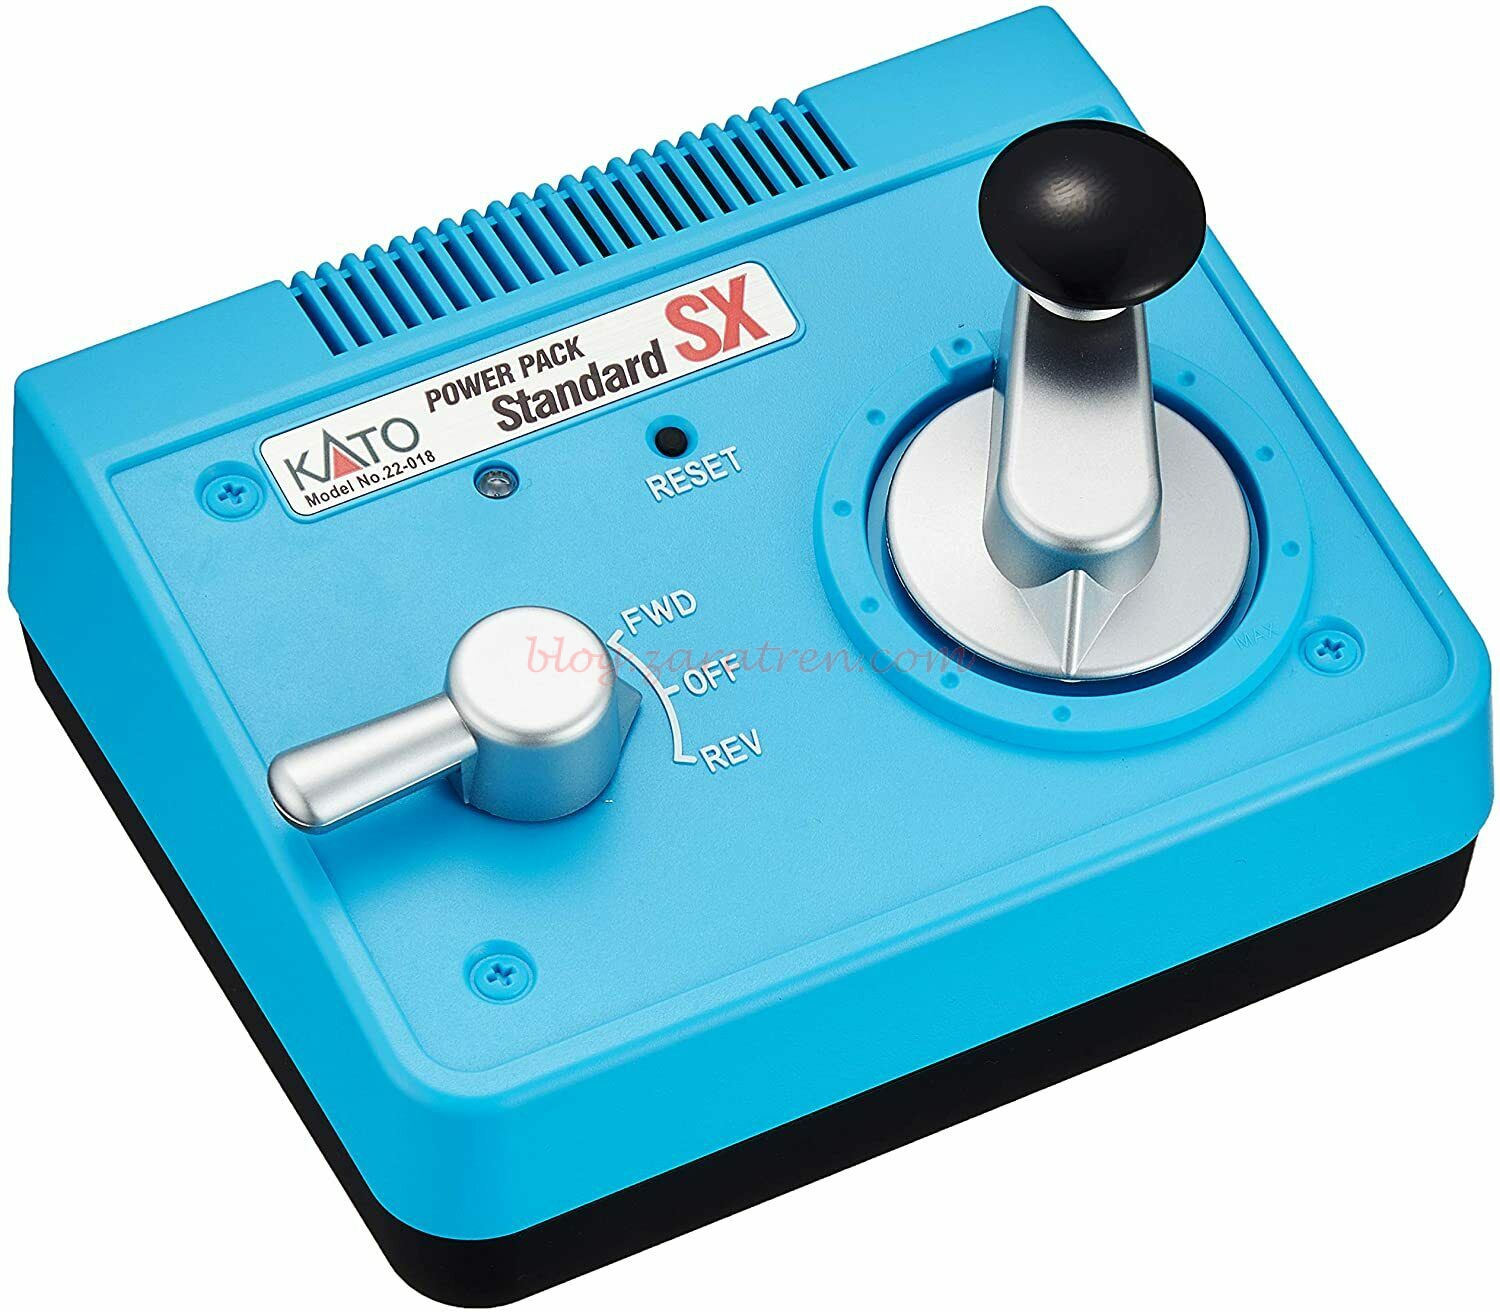 Kato – Regulador analogico Kato, Ref: 22-018, 1 Amp. 36VA.